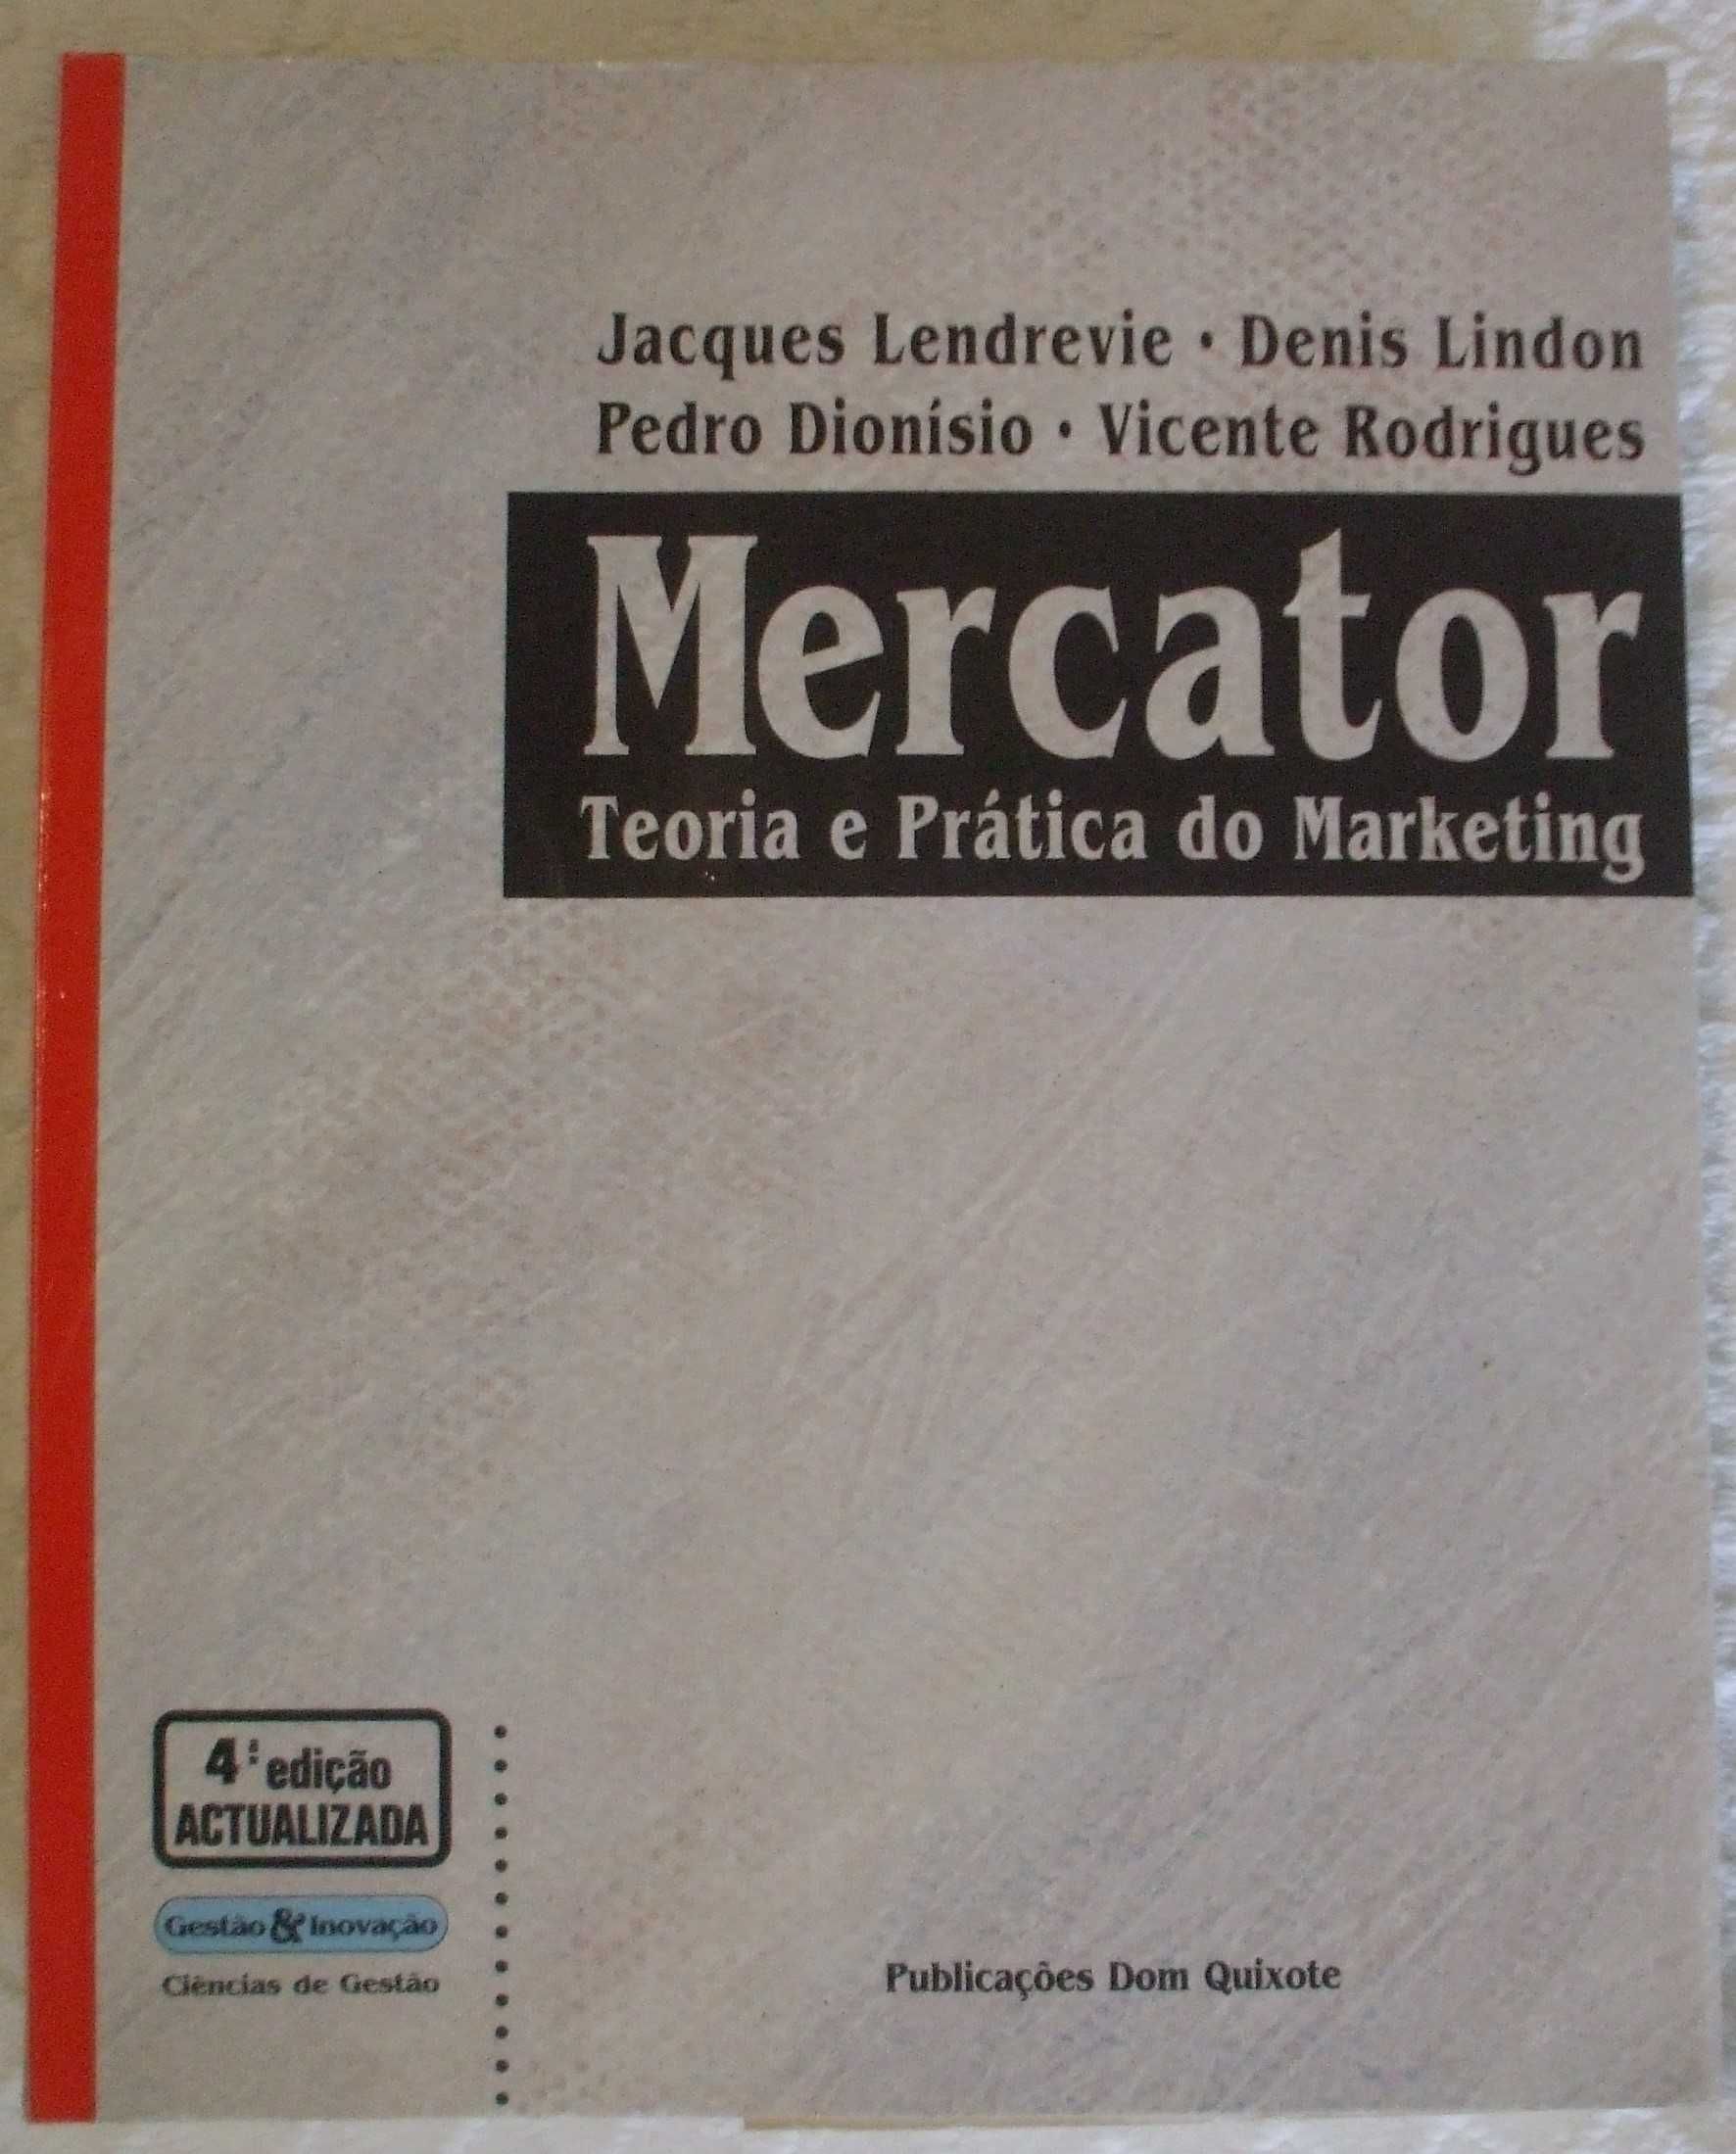 Mercator, Jacques Lendrevie et alii